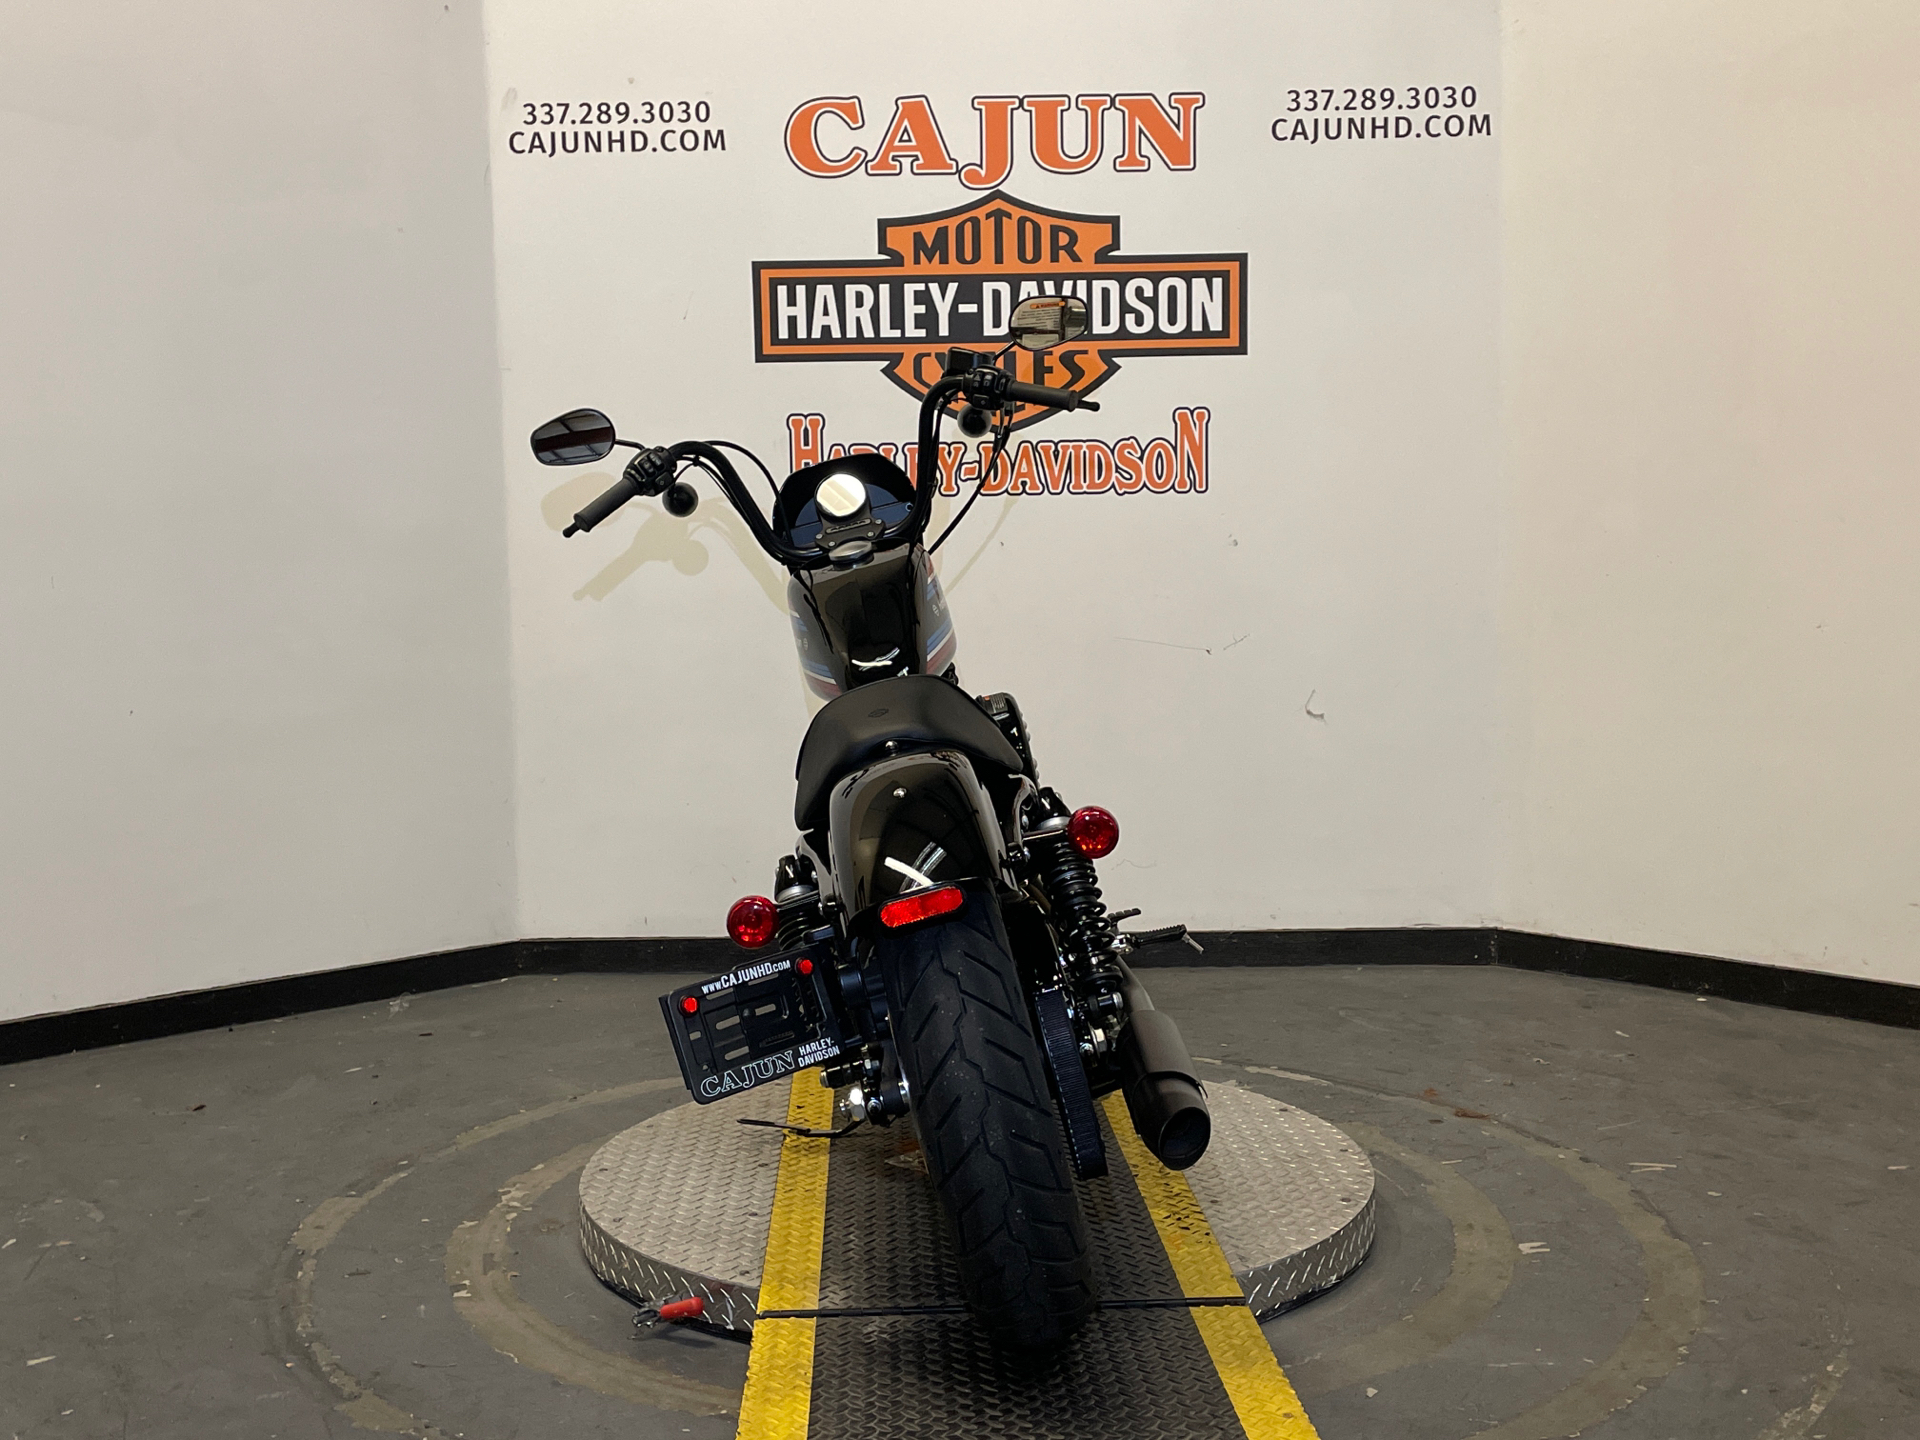 2014 Harley-Davidson Iron 1200 new - Photo 8